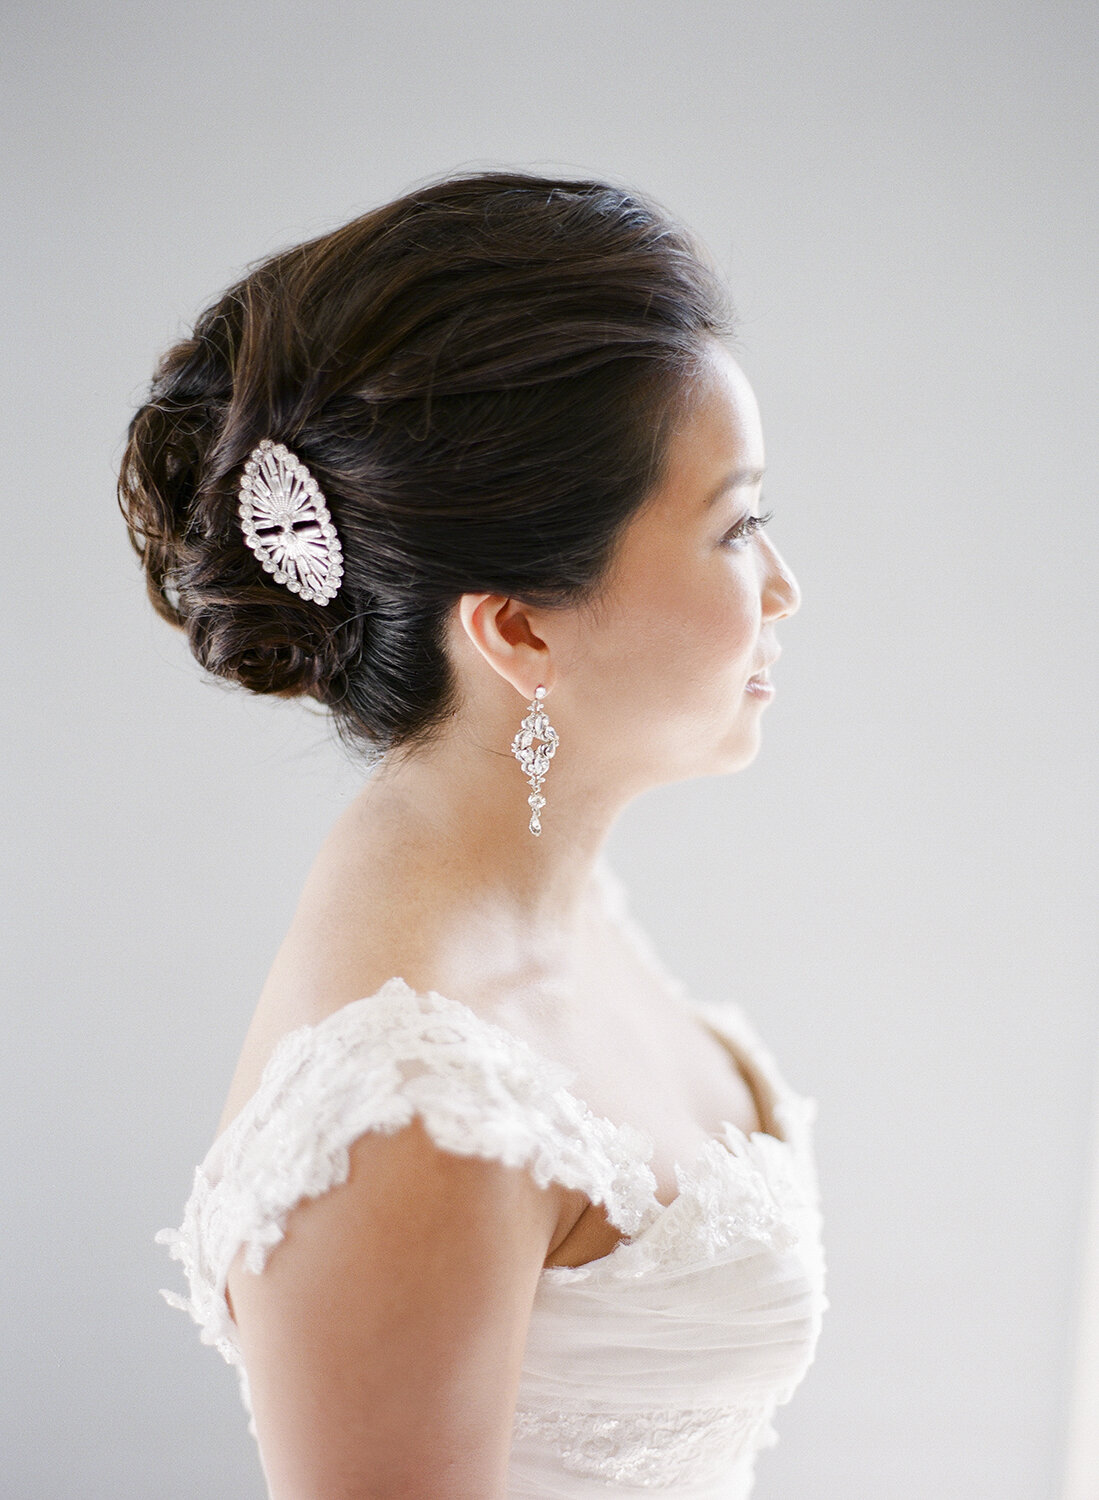 asian makeup hair | San Francisco Makeup Hair Bridal, Wedding Makeup Artist  Hair Stylist Bay Area